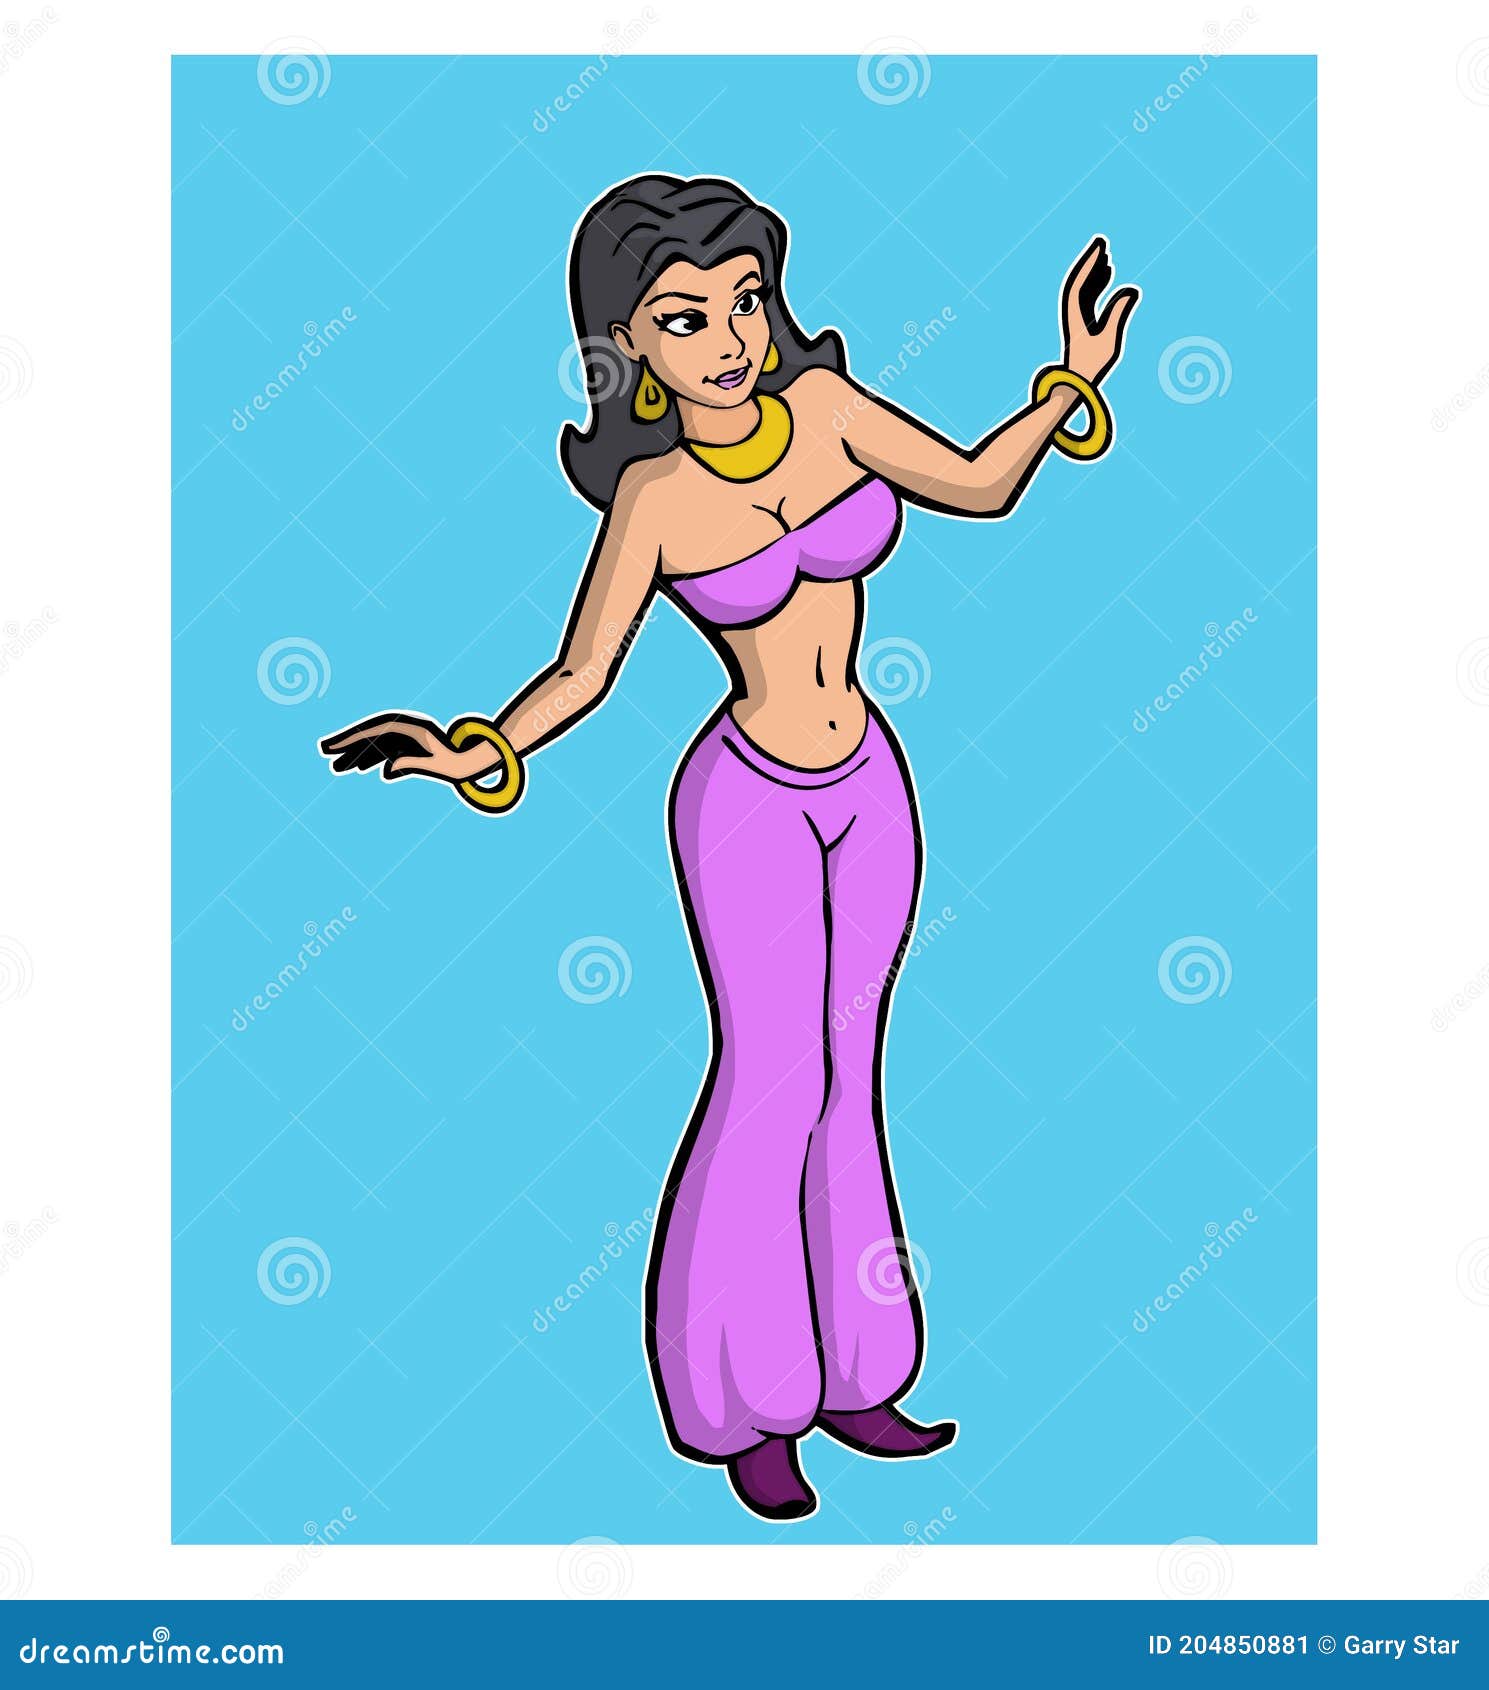 Jasmine Princess Cartoon Character Jasmine Standing with Her Hands Up  Illustration Stock Illustration - Illustration of character, poster:  204850881